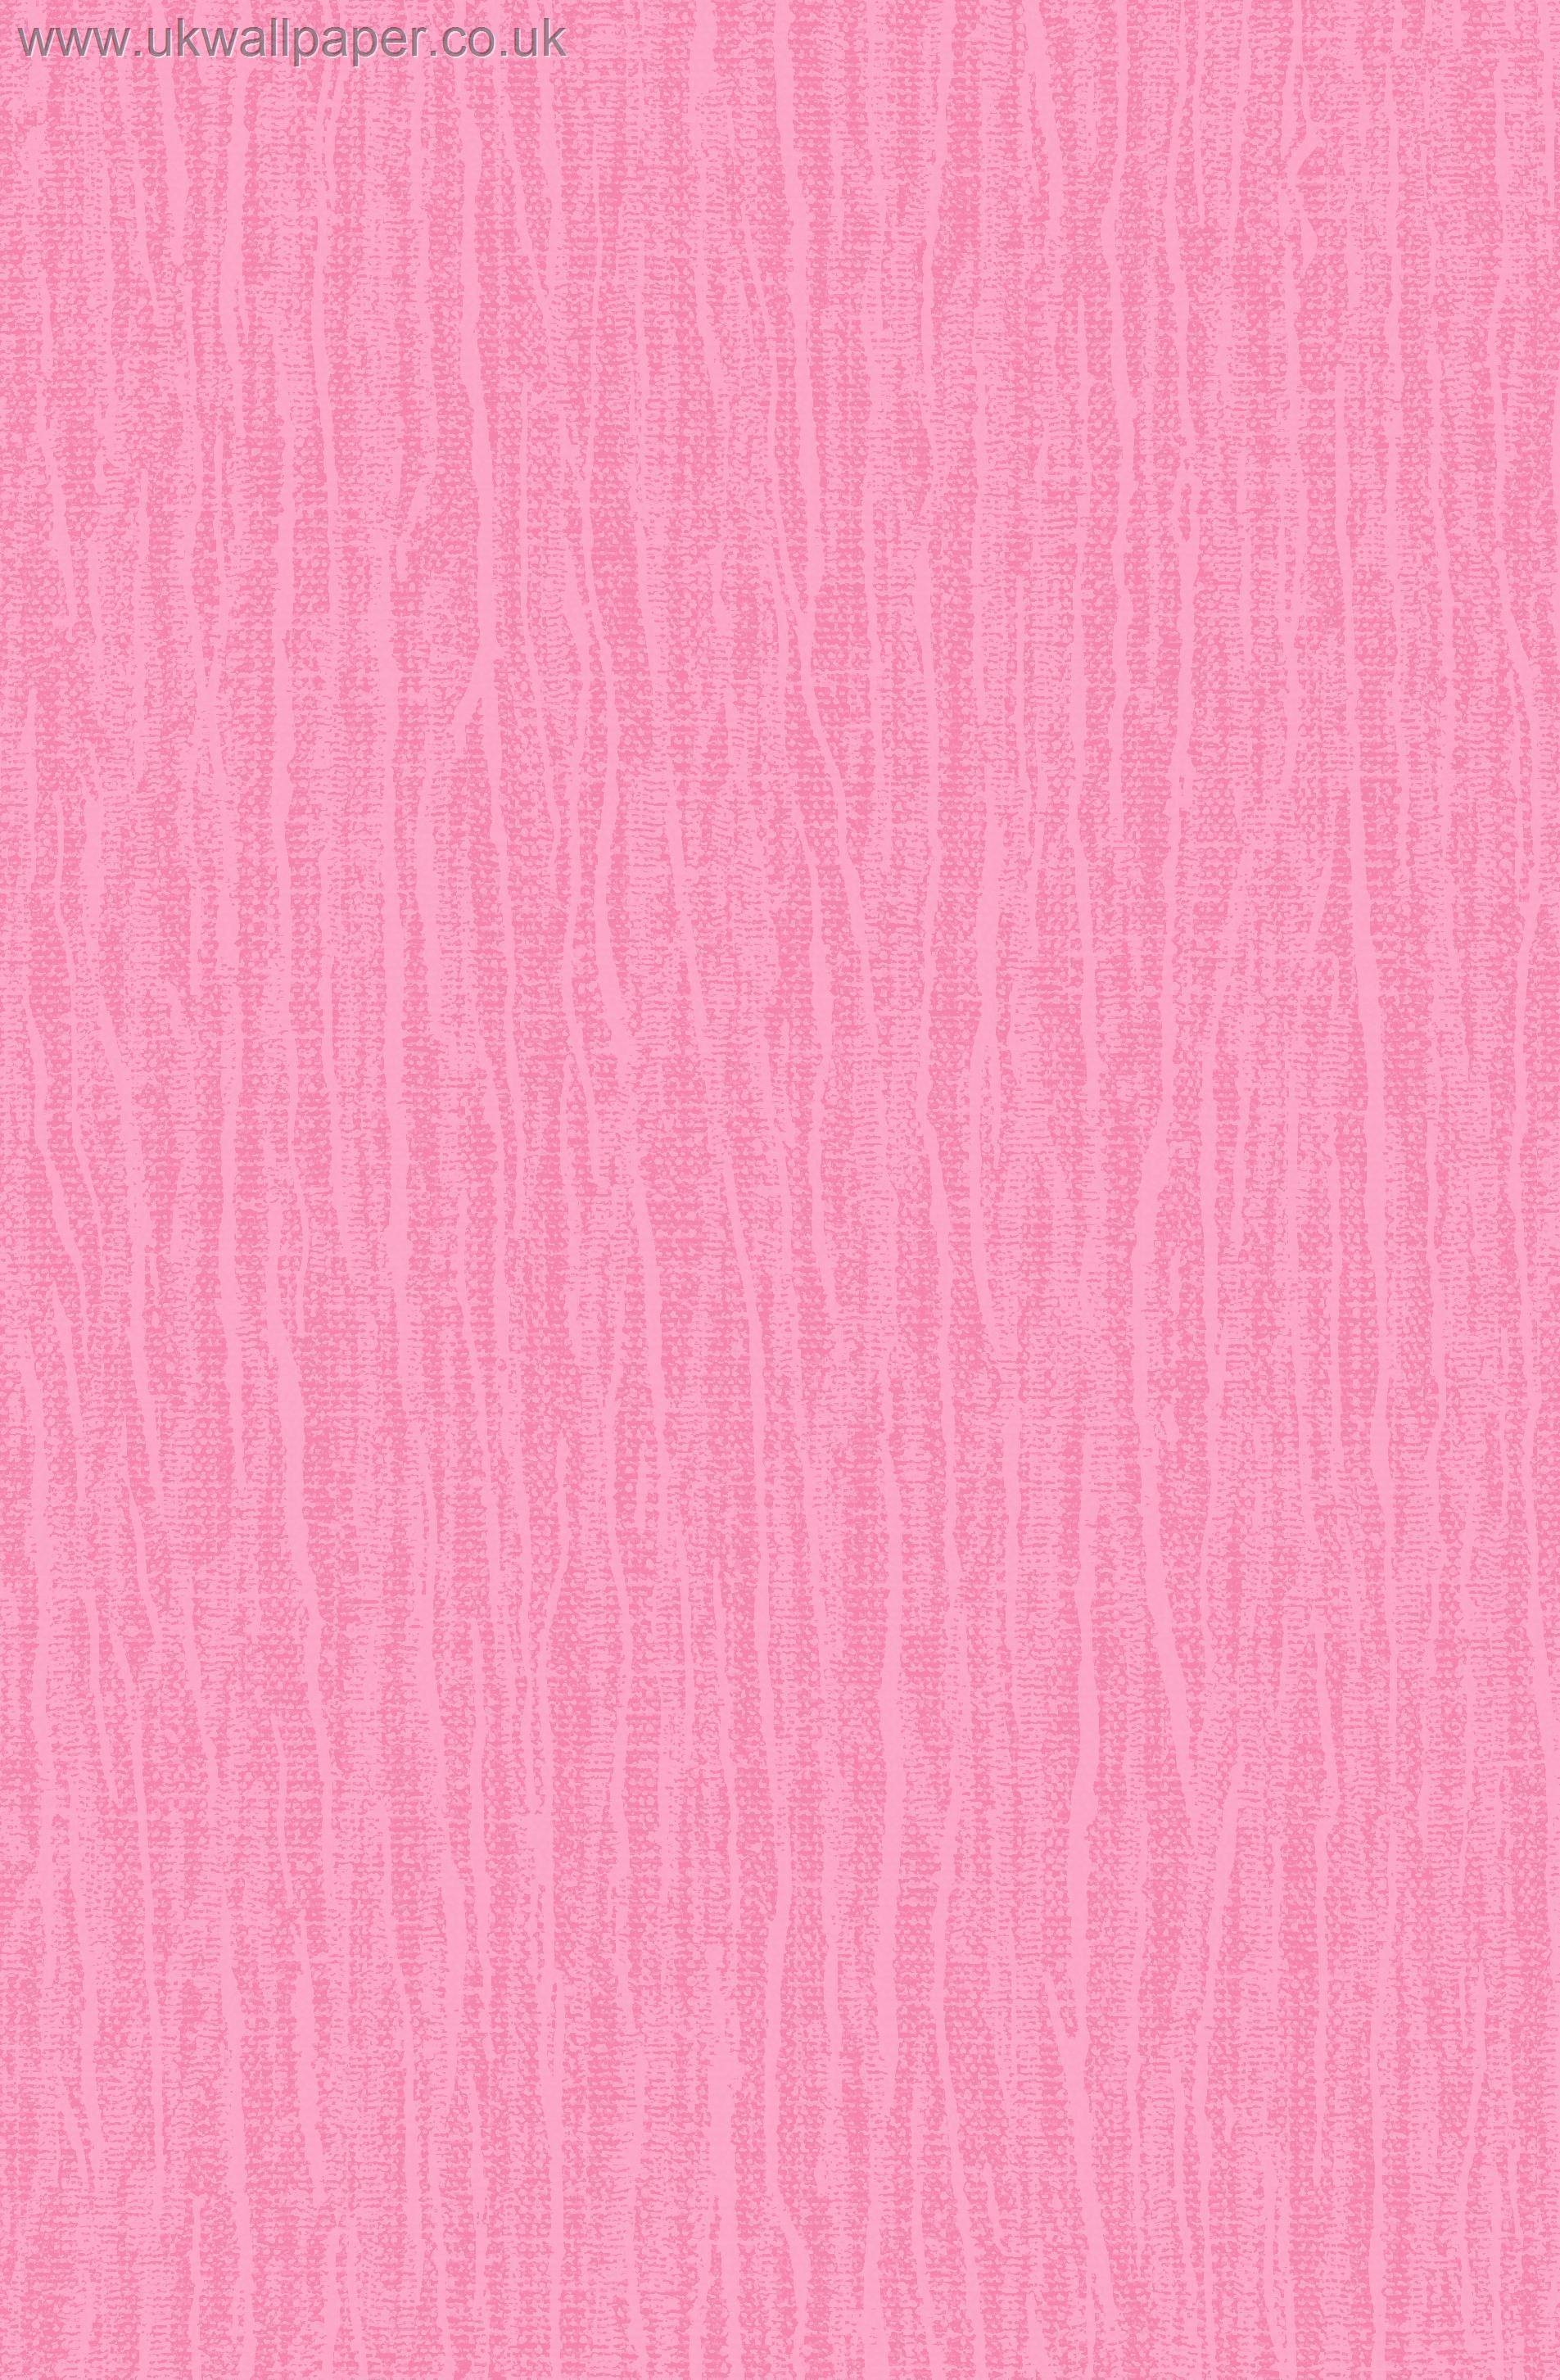 Pink Puter Wallpaper